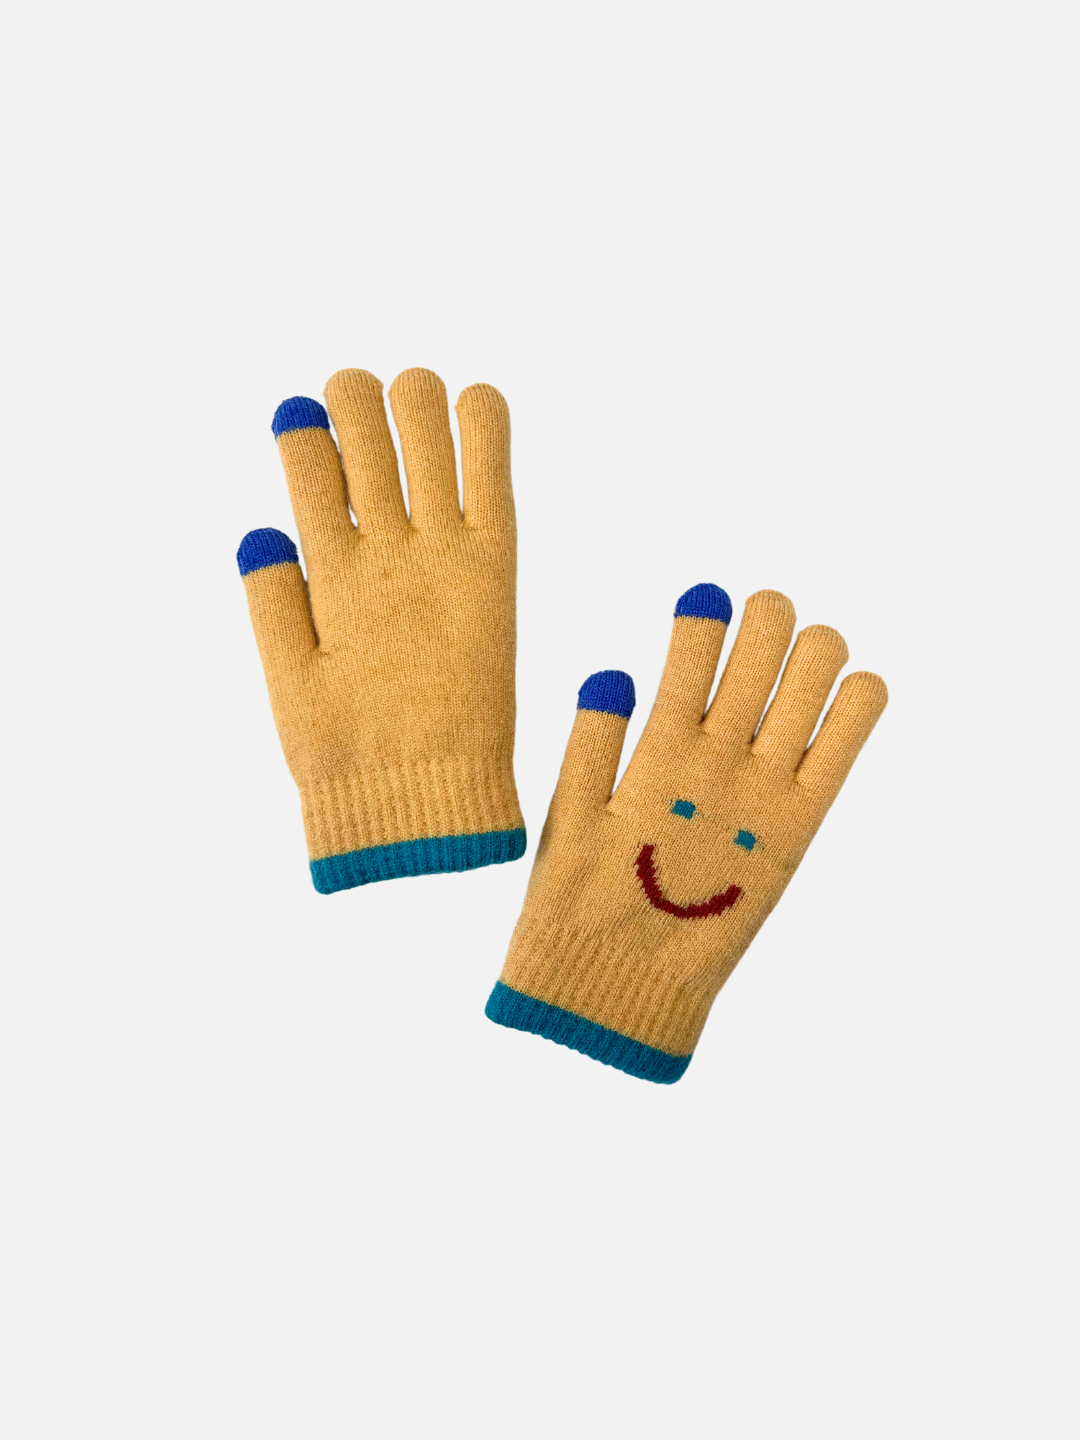 Back view of kids' smile gloves.